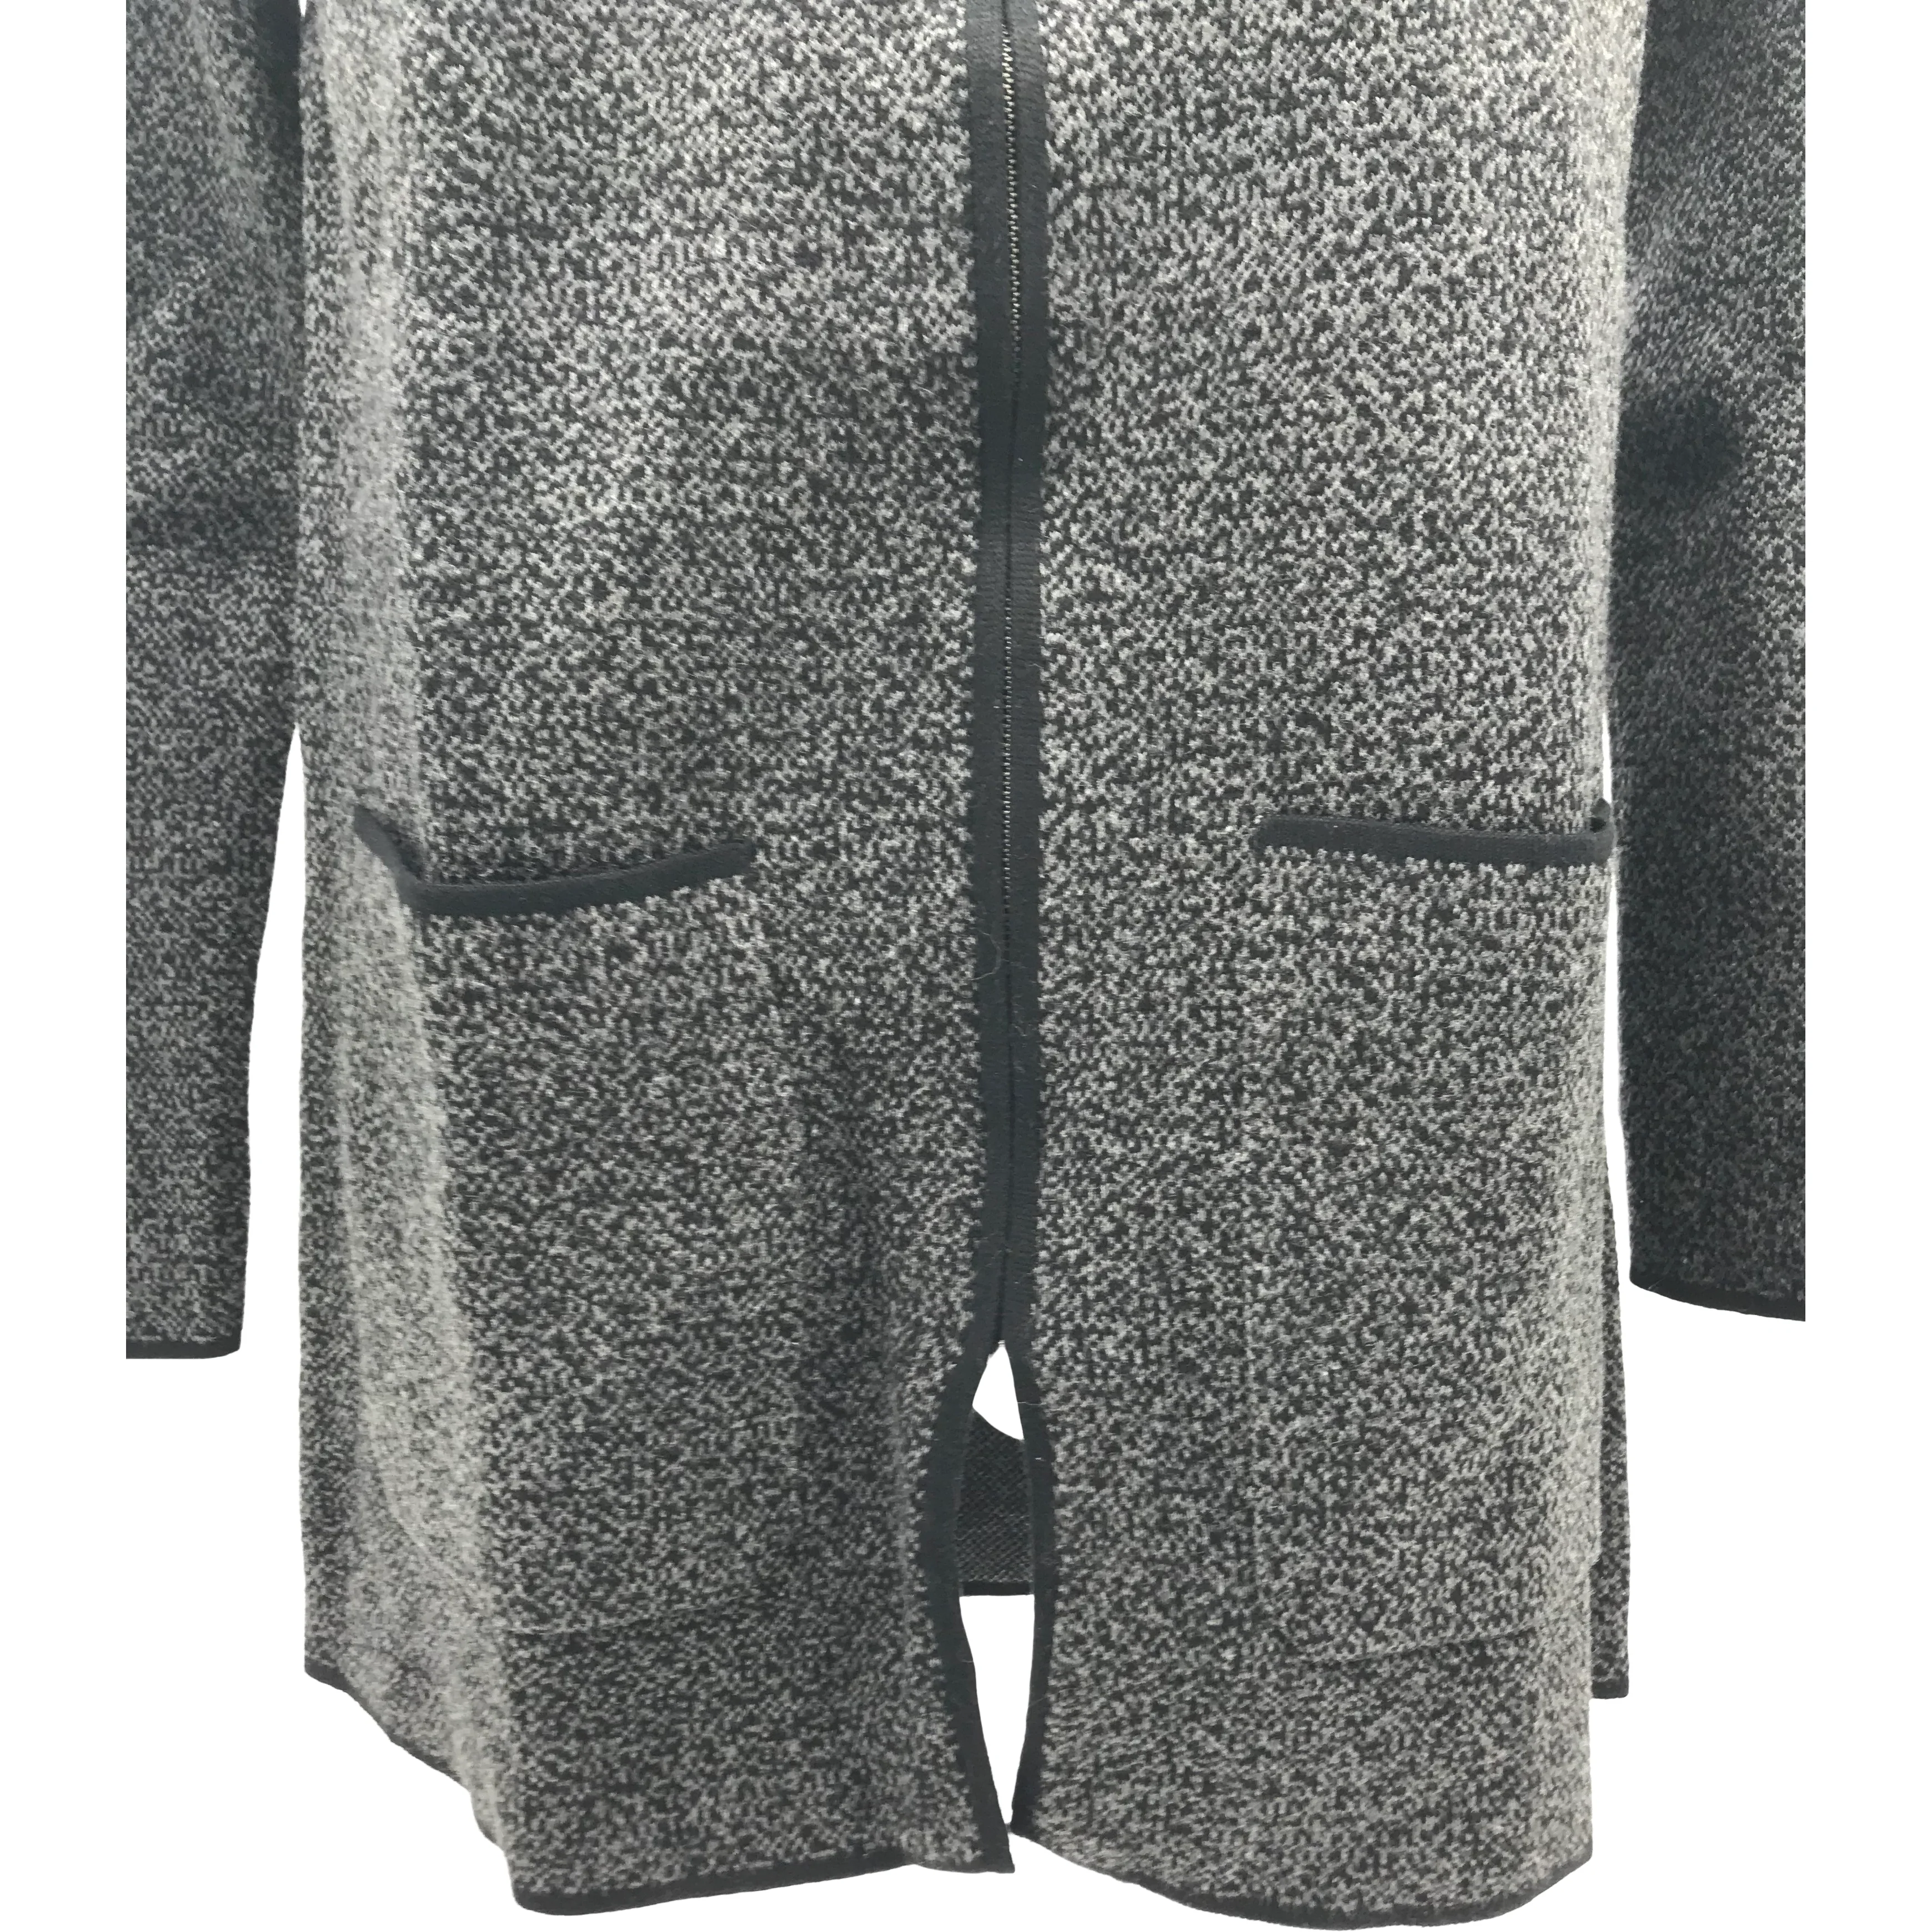 Nicole Miller Women's Zip Up Sweater / Black & Grey / Size Small